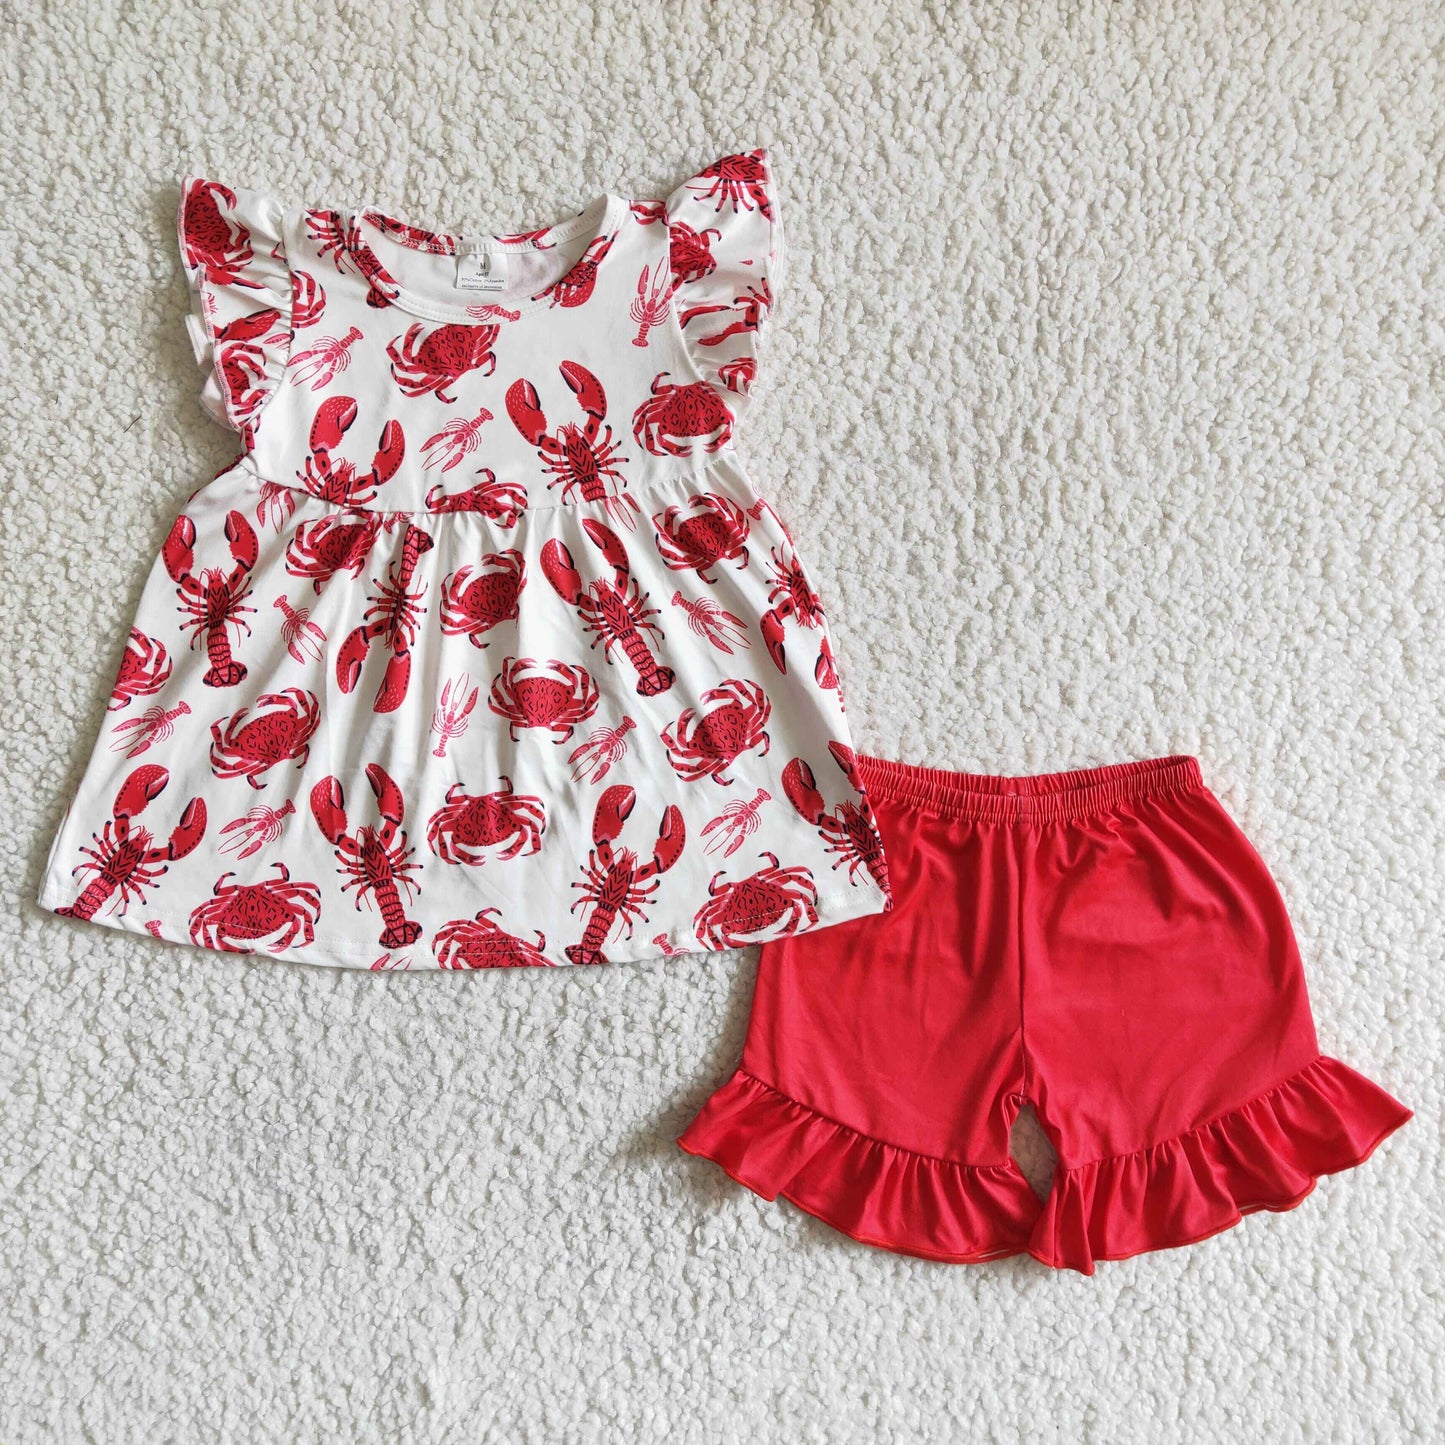 Baby girls Crawfish 2pcs summer short outfit C0-27